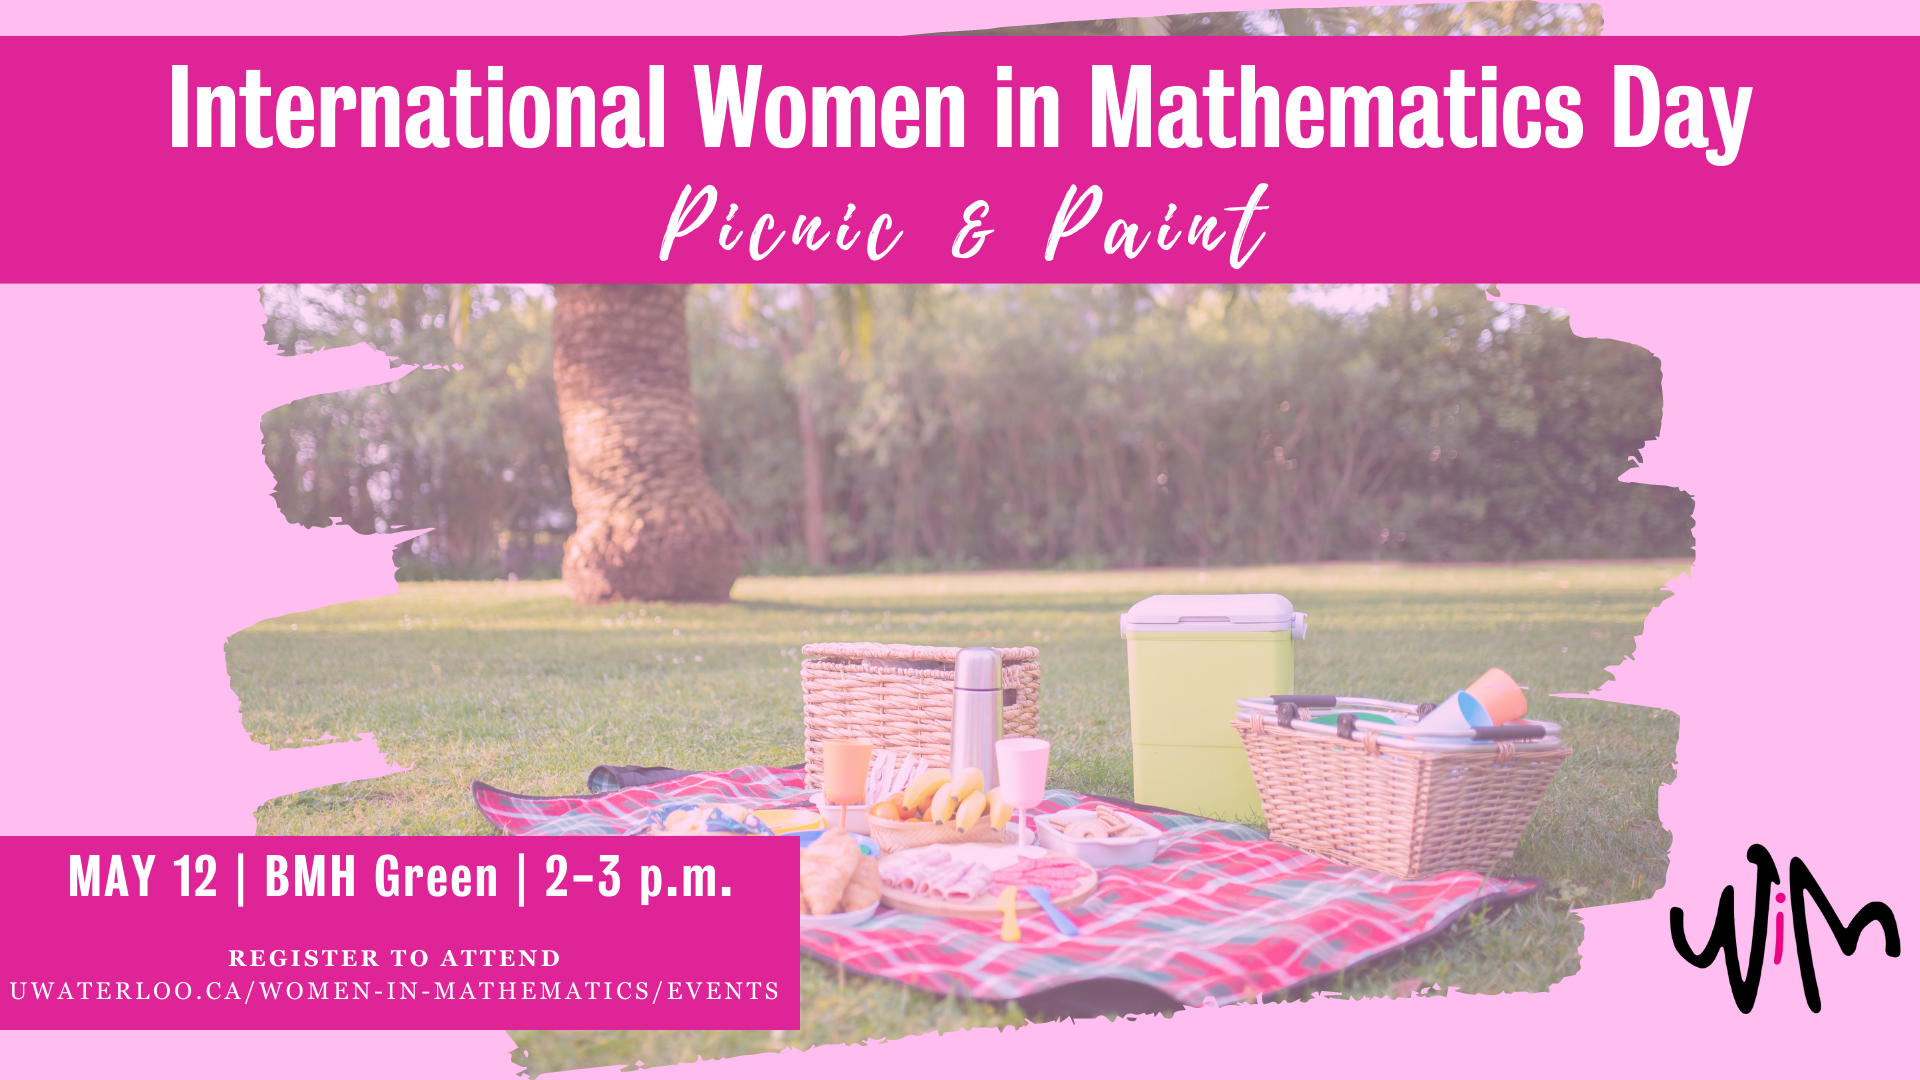 Women in Math Day event information